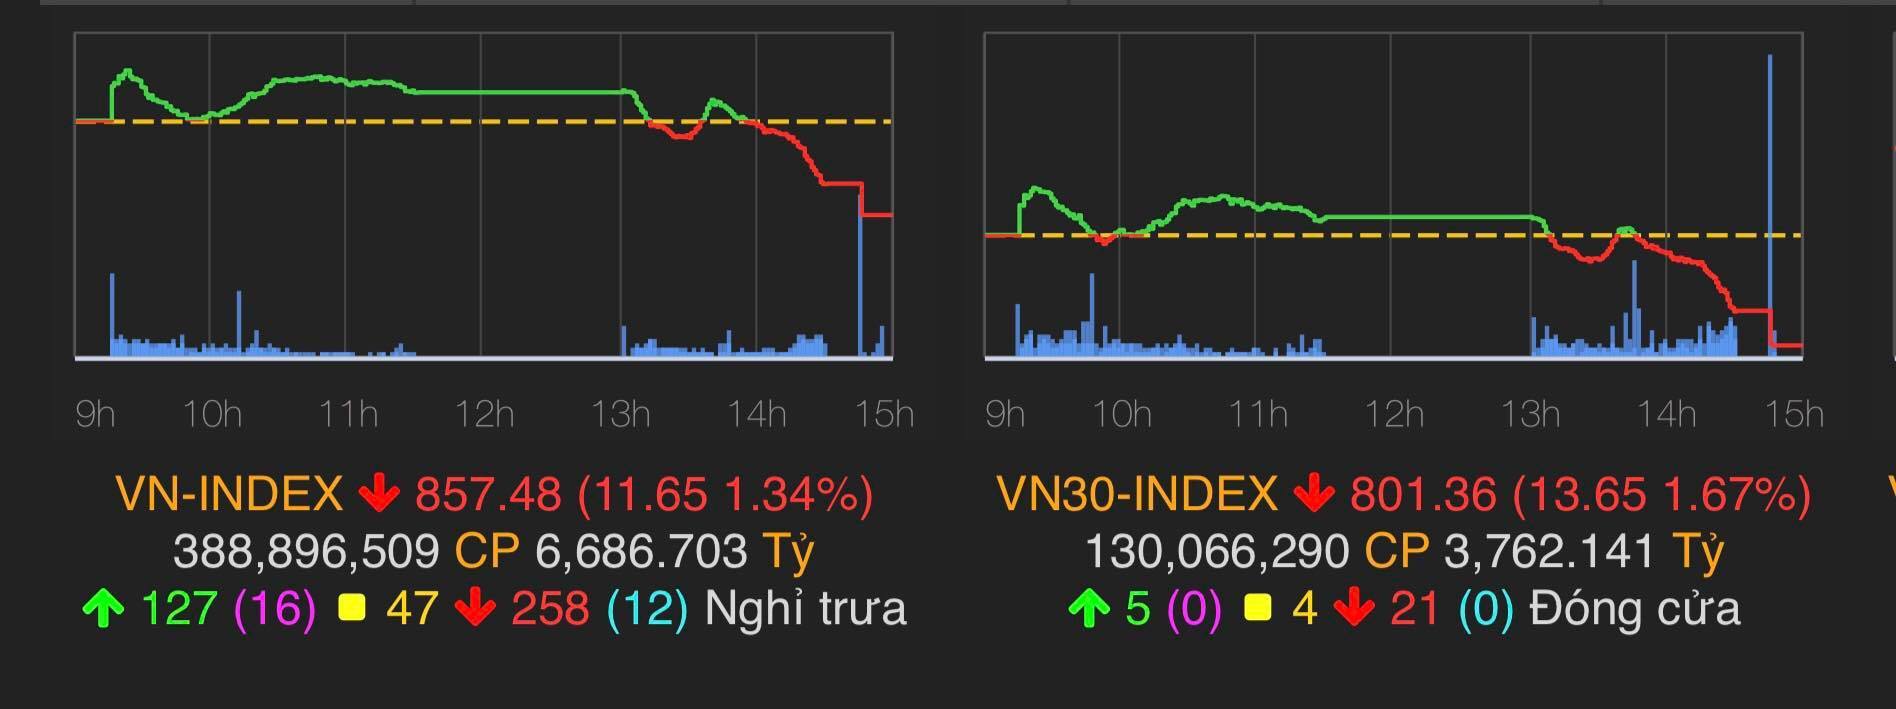 VN-Index giảm 11,65 điểm (1,34%) xuống 857,483 điểm